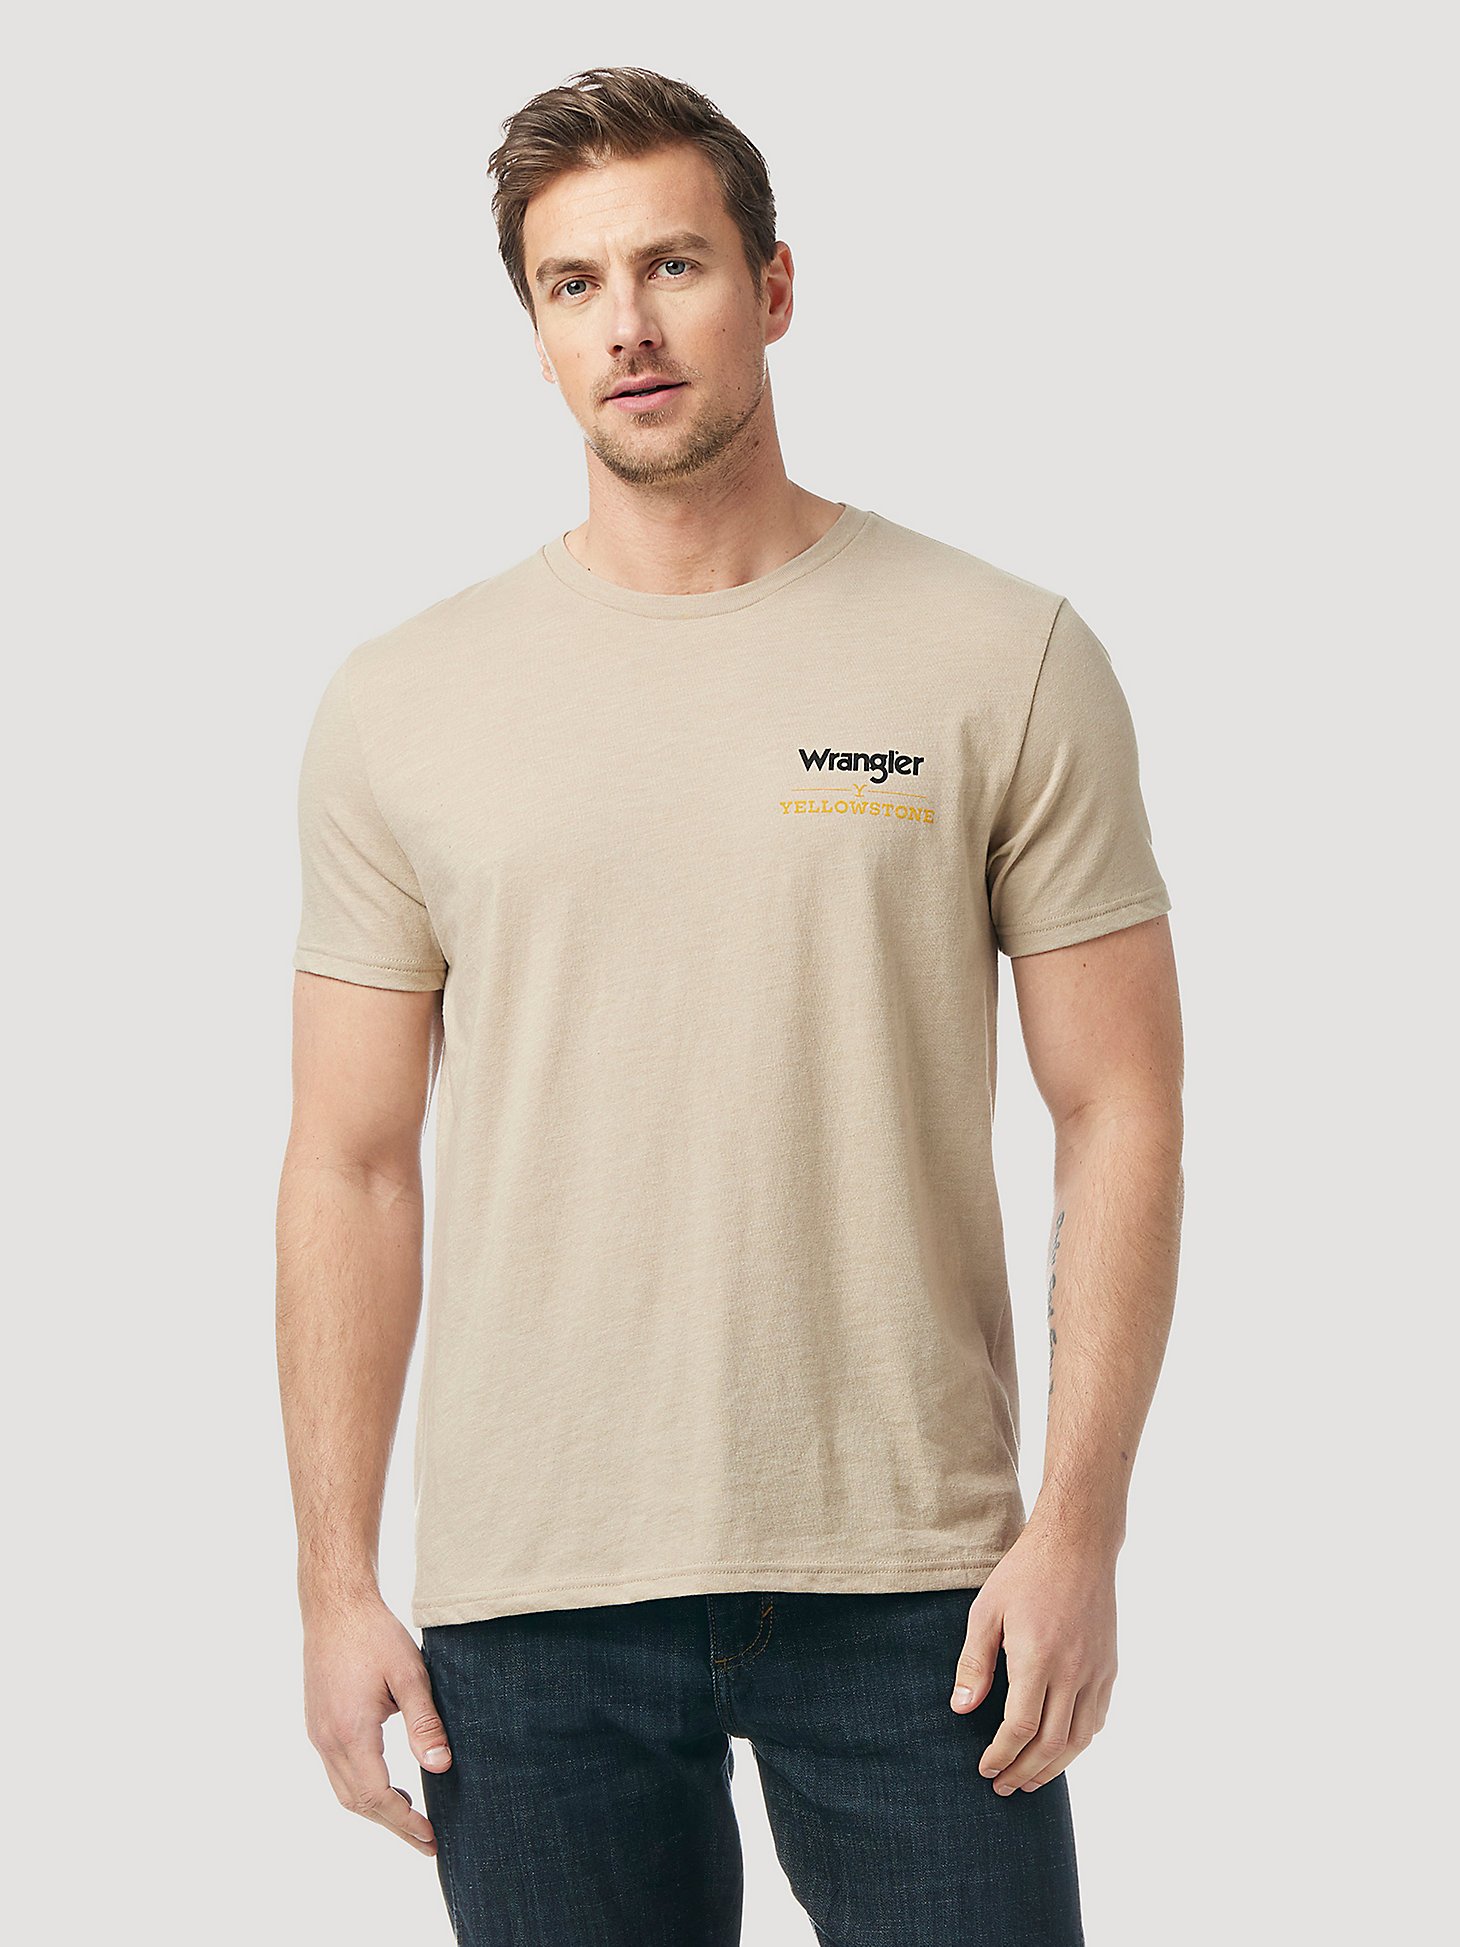 Wrangler x Yellowstone Men's Montana T-Shirt in Trench Coat alternative view 1